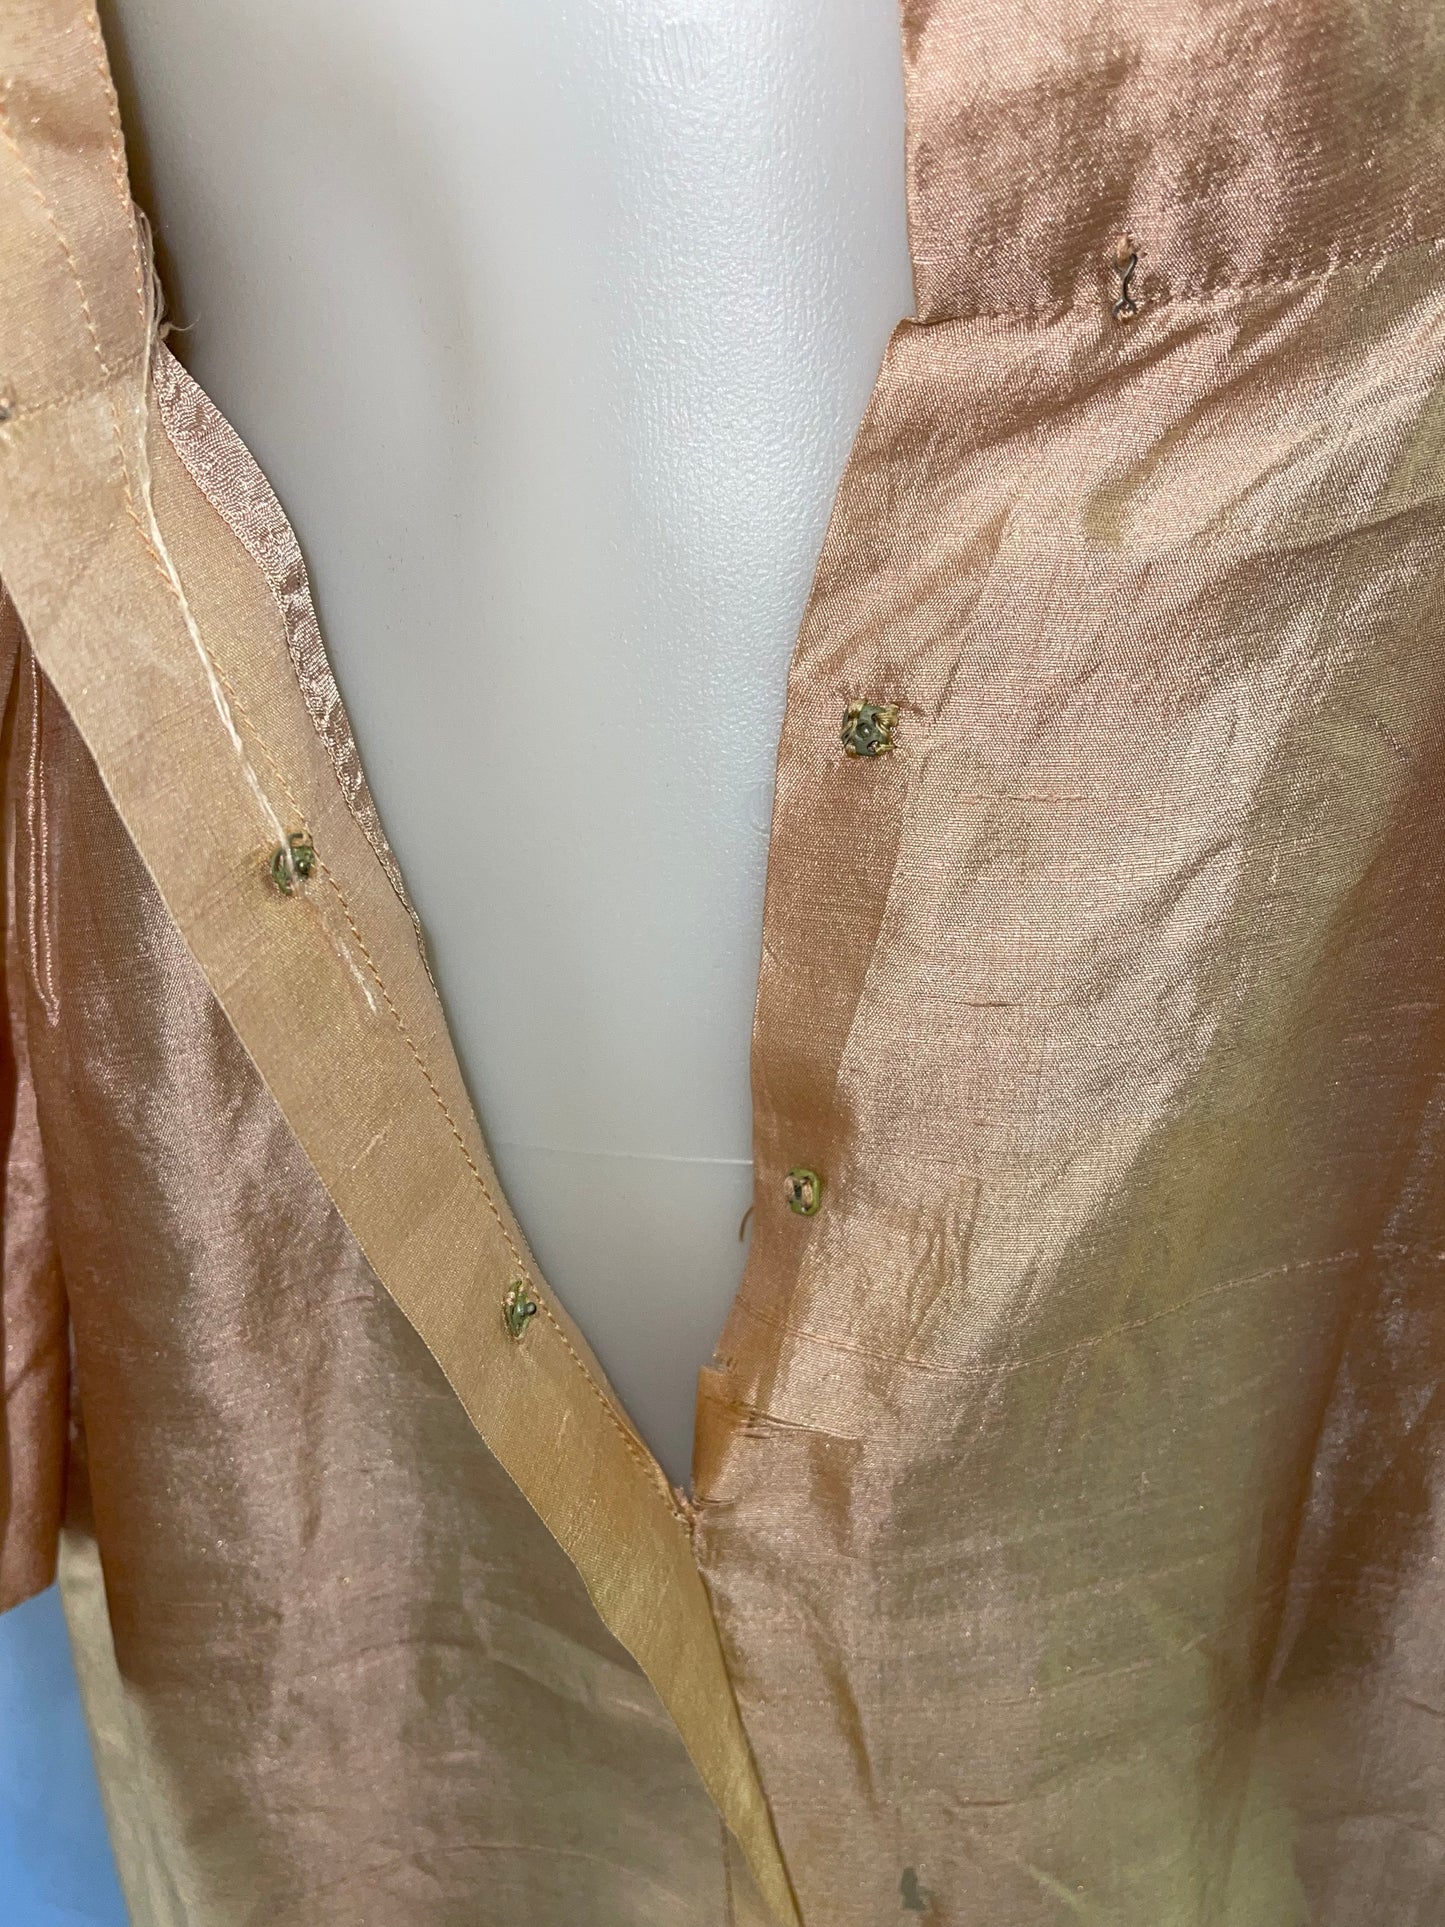 40s Raw Silk Peplum Dress